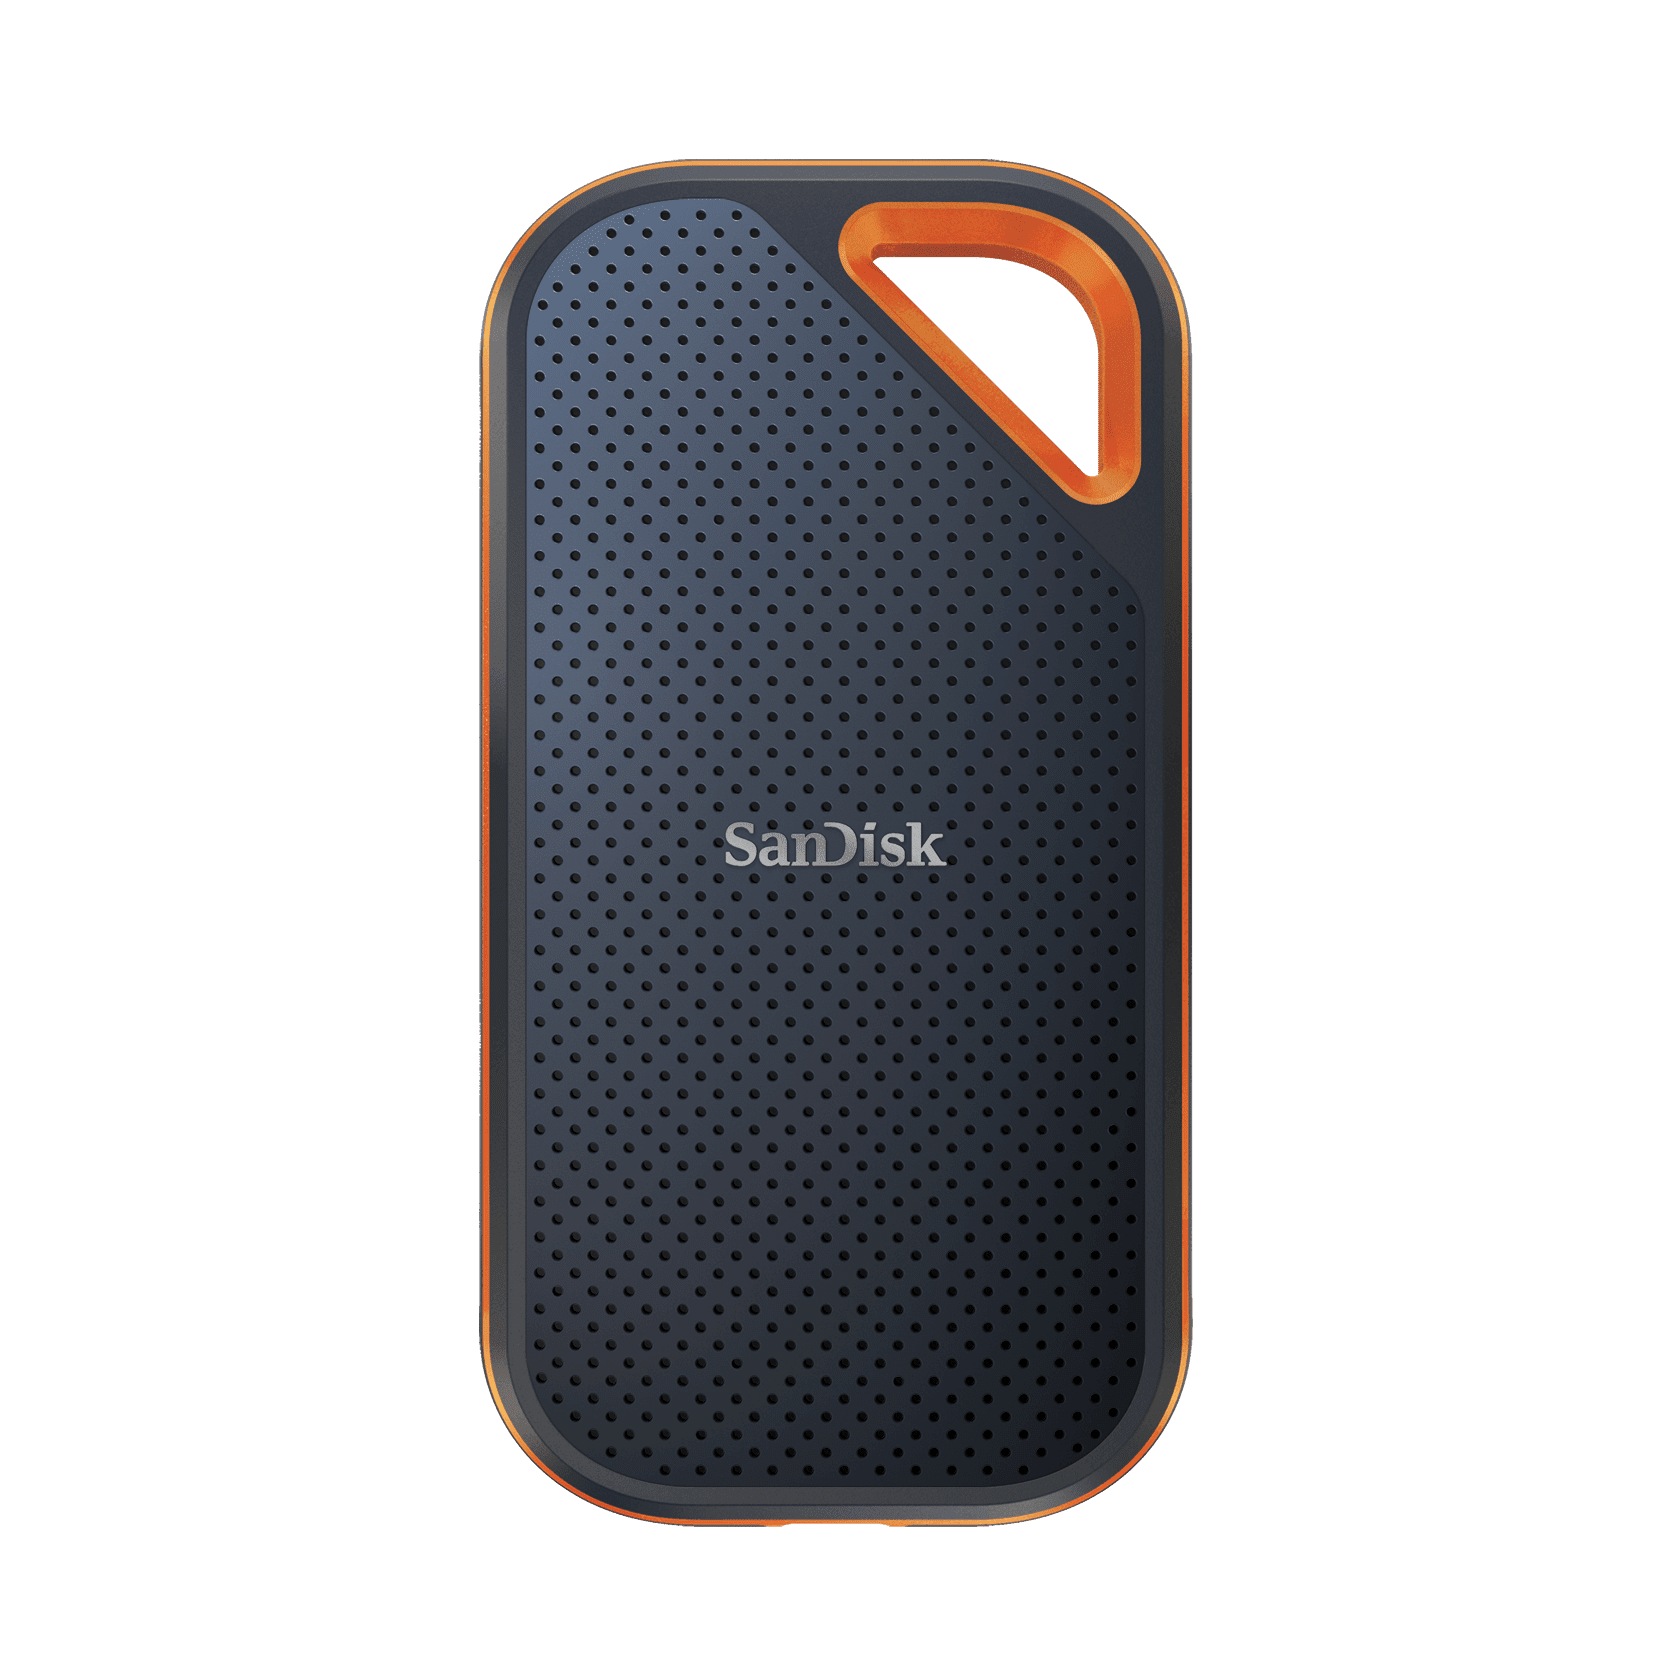 Wise Portable SSD 2TB – Thomann United States